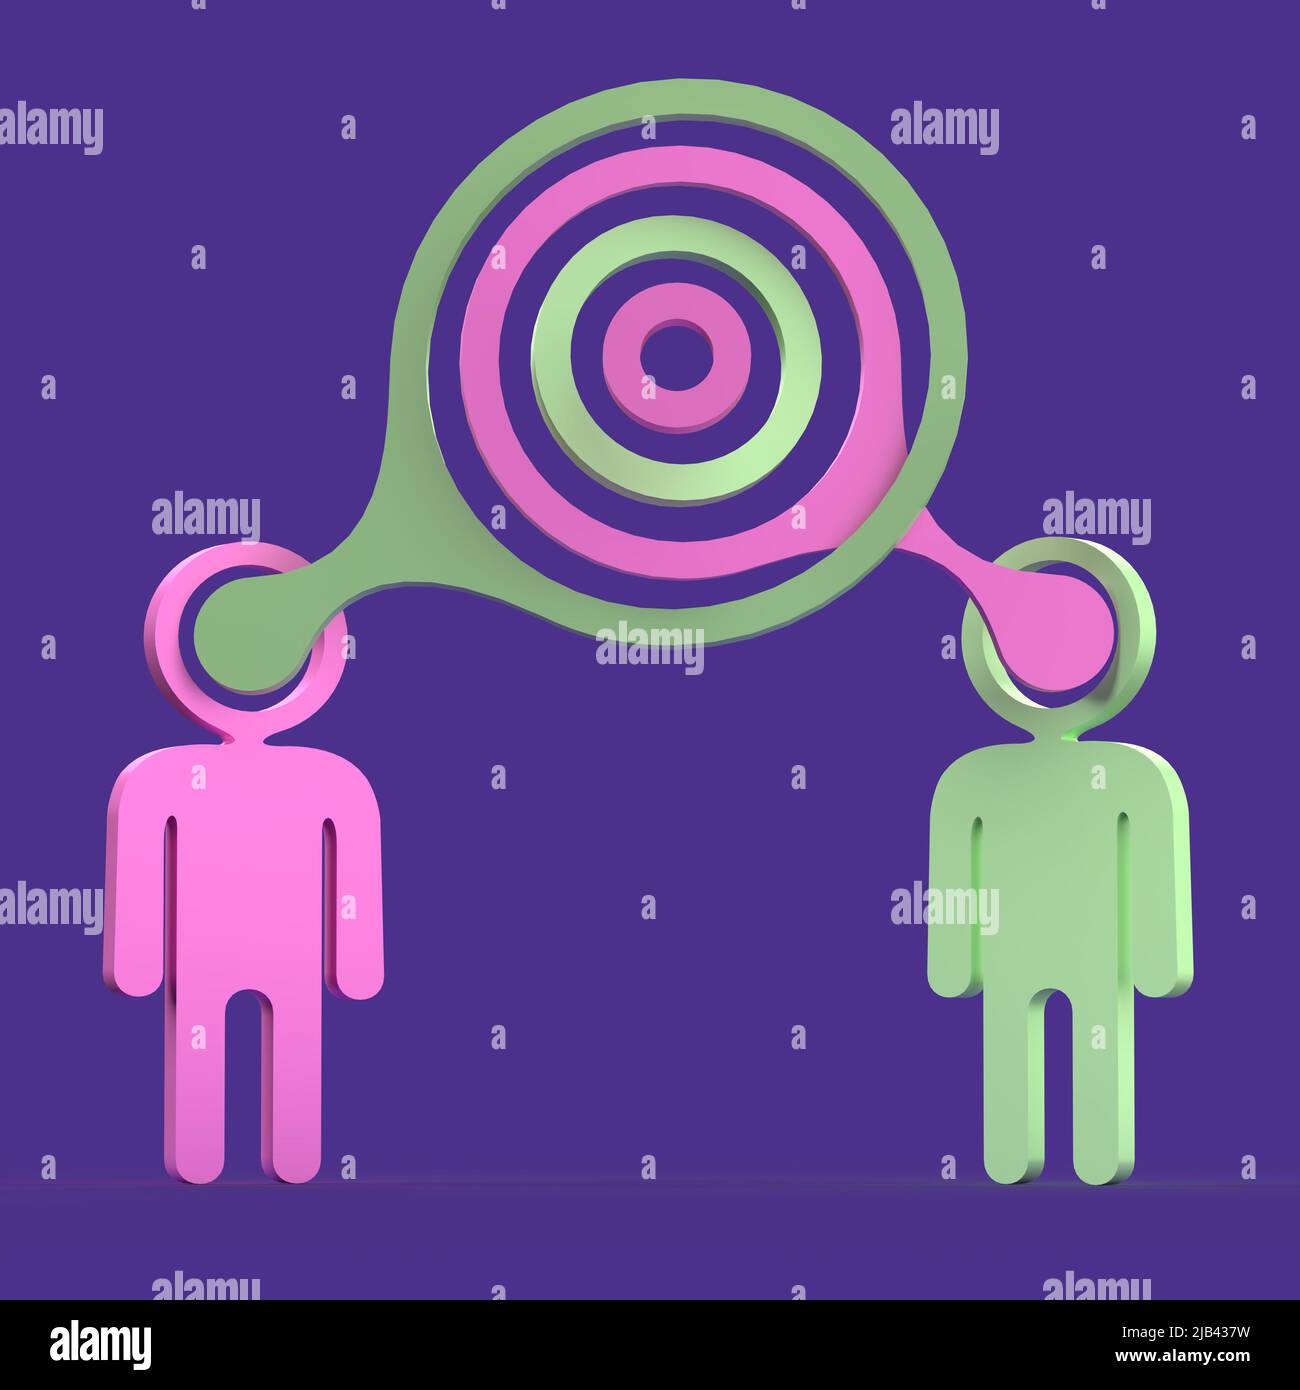 Intercambio conversacional entre dos individuos - ilustración de diálogo en 3D Foto de stock